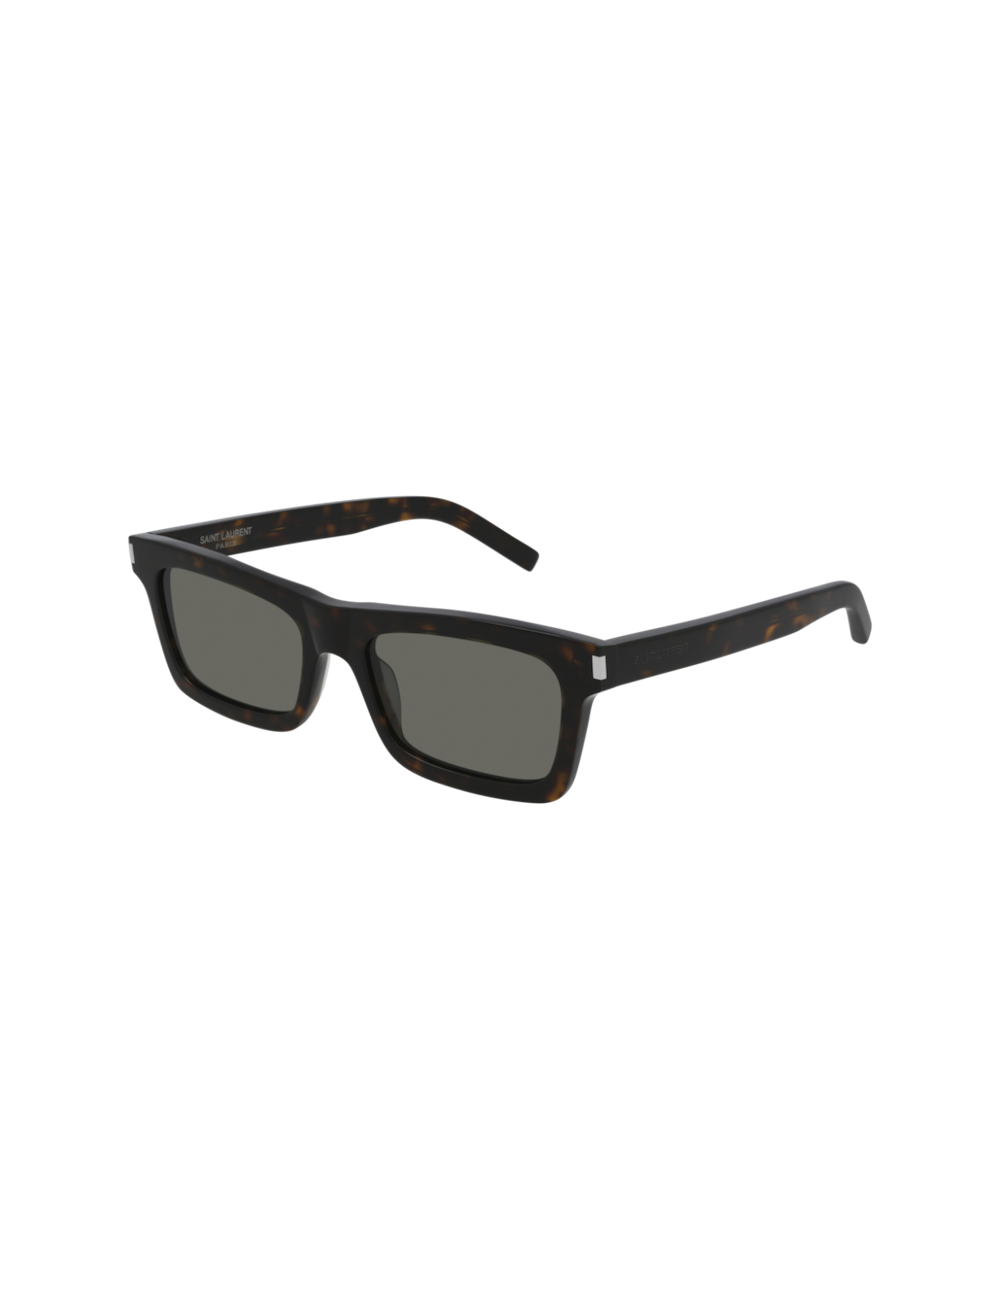 Saint Laurent Betty Oversized Square Sunglasses, 63mm | Bloomingdale's